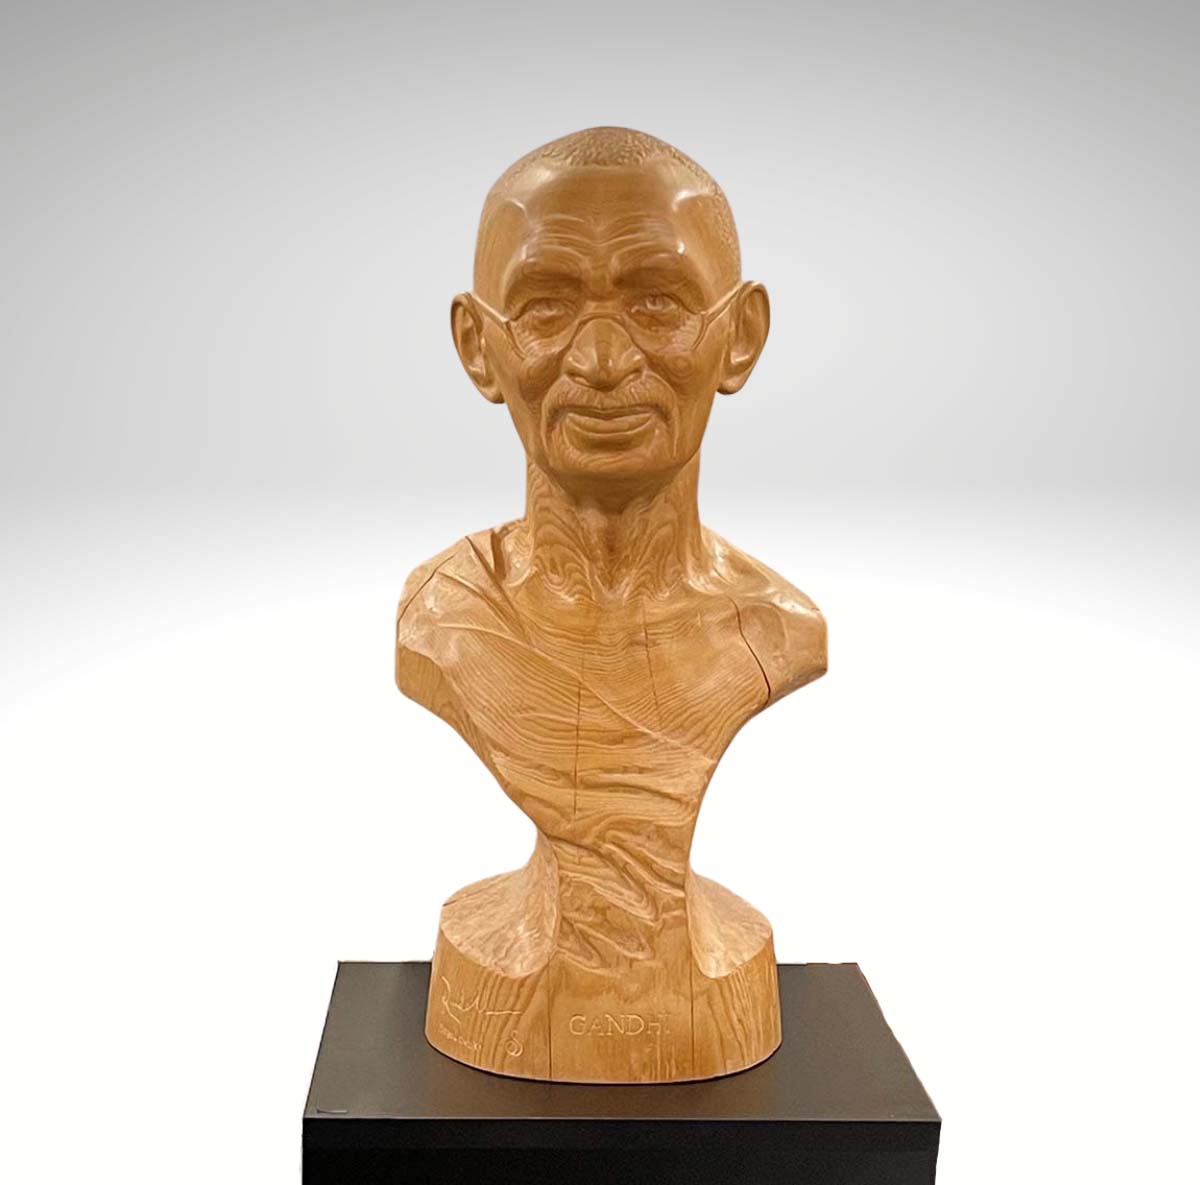 Contemporary Sculpture. Title: Mahatma Gandhi, Wood, White Cedar, 24 inches by Canadian artist Rudolf Sokolovski.